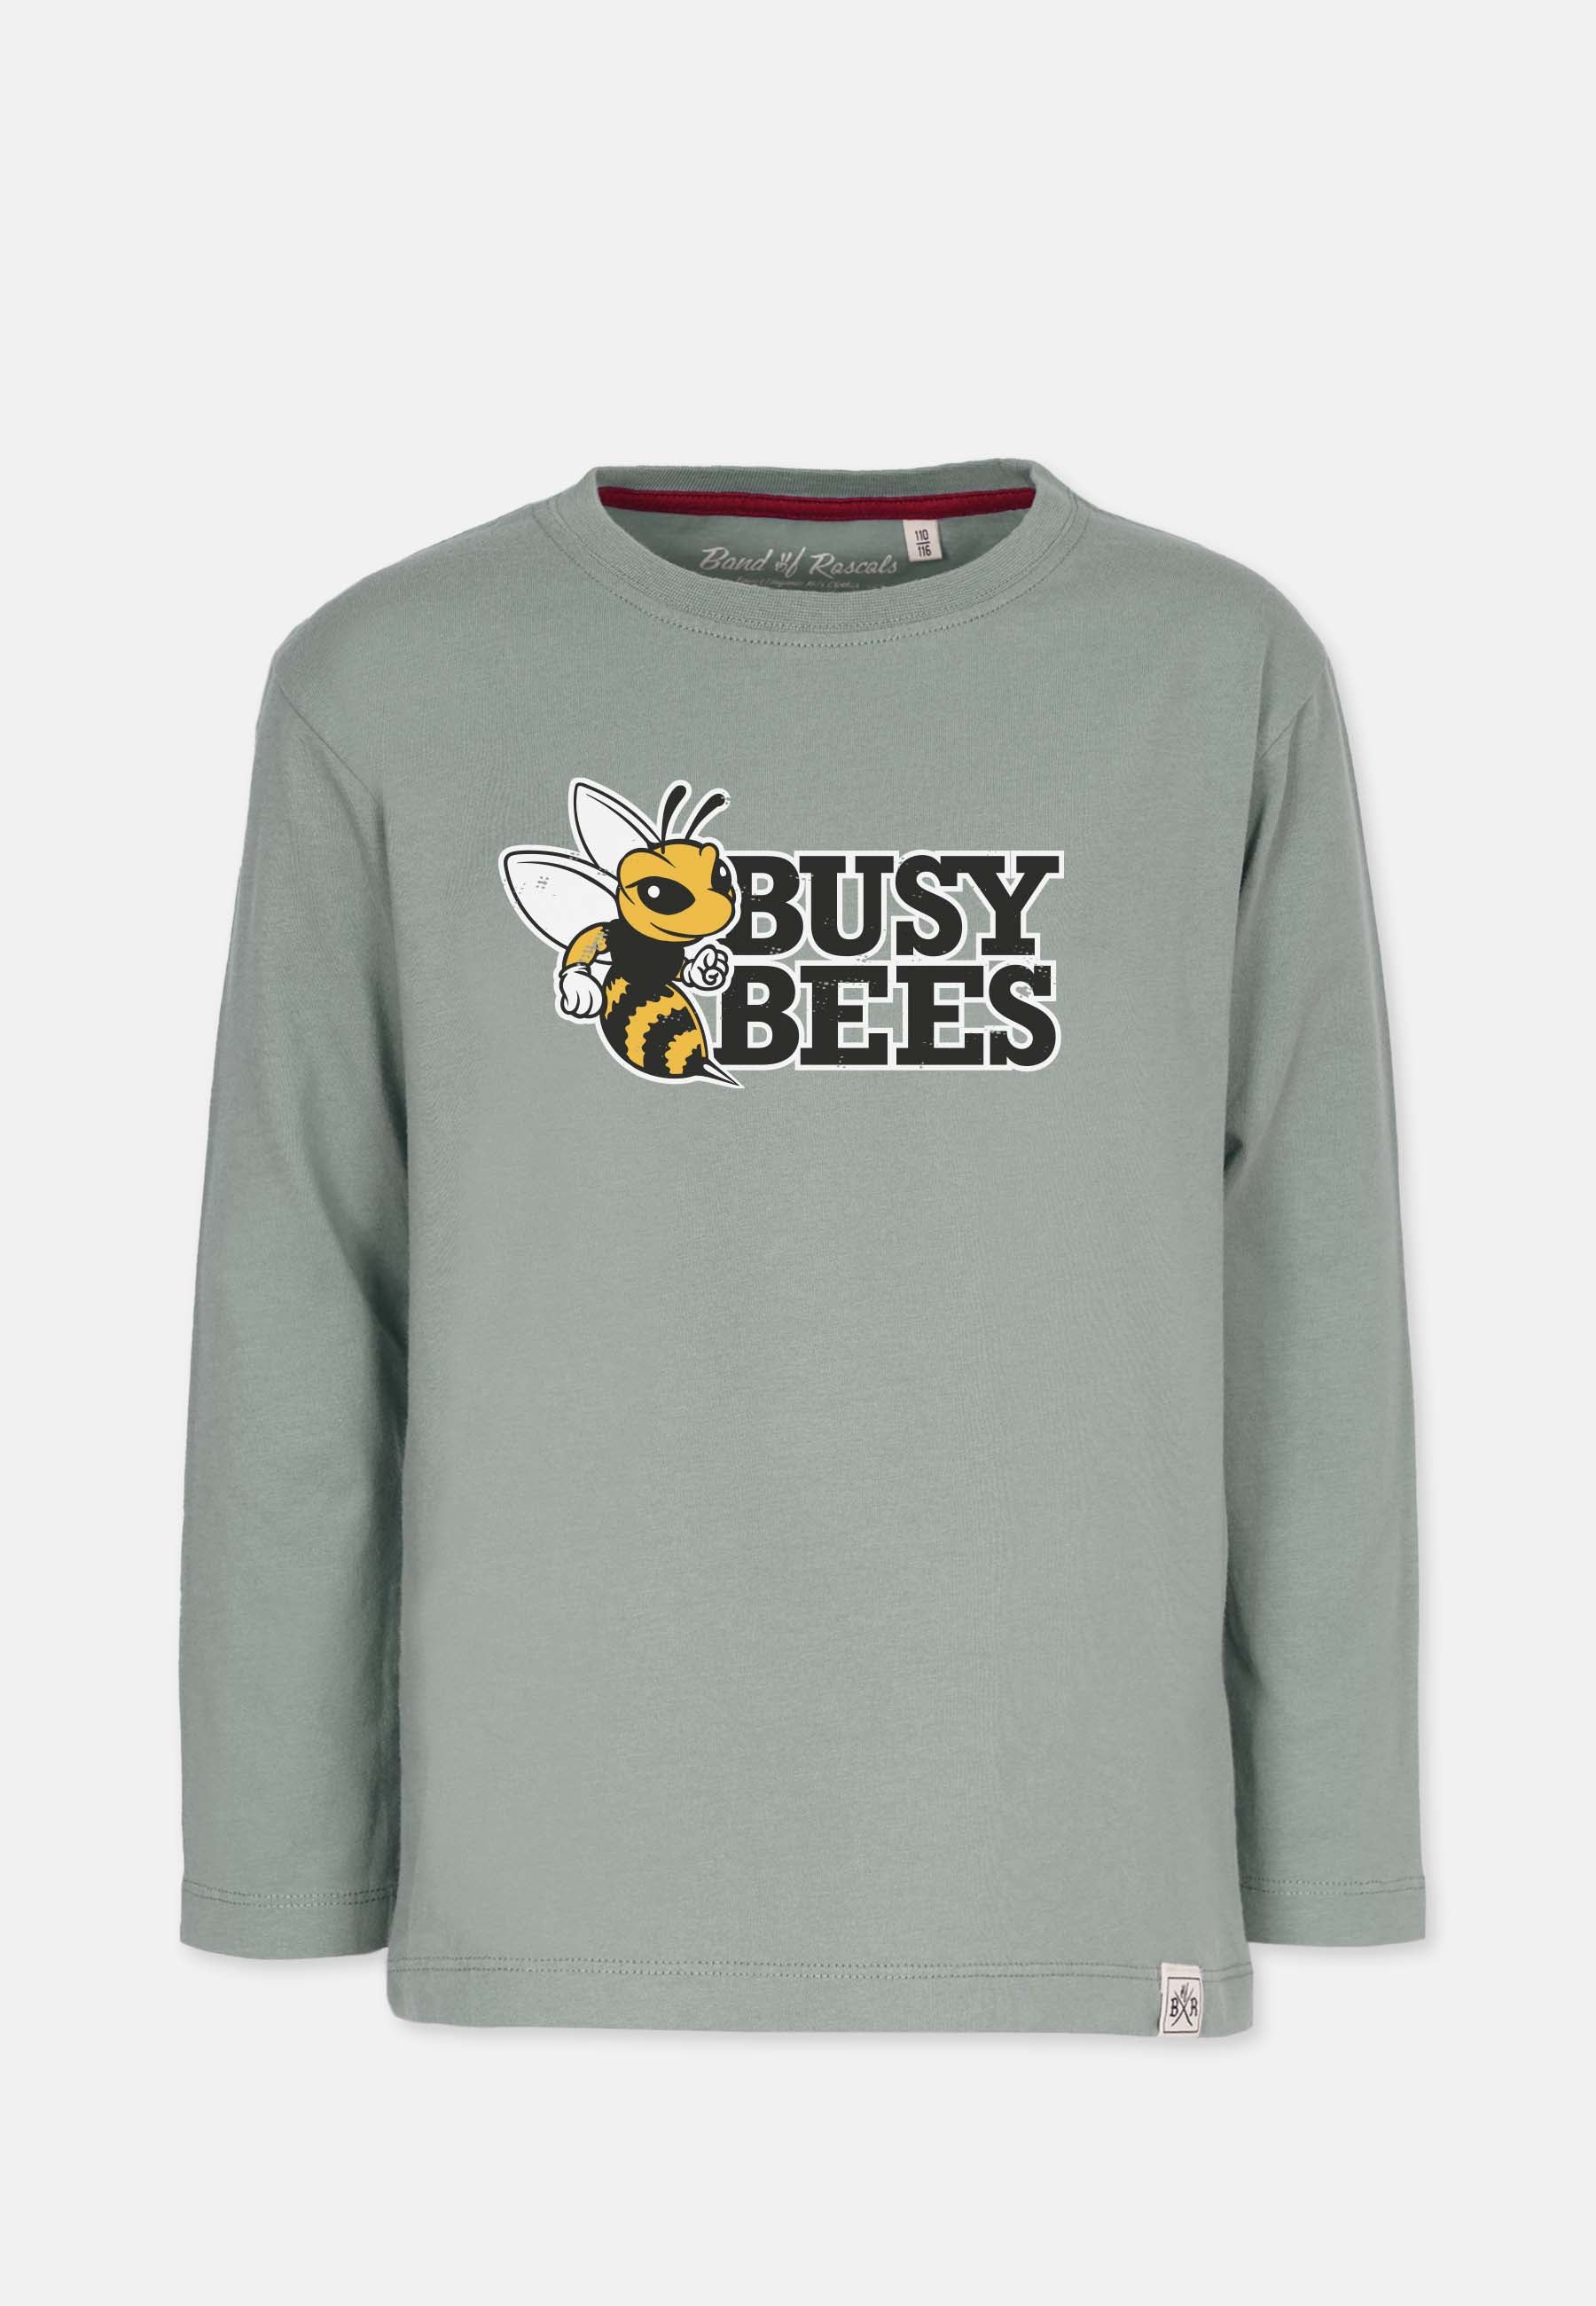 Busy Bees Longsleeve